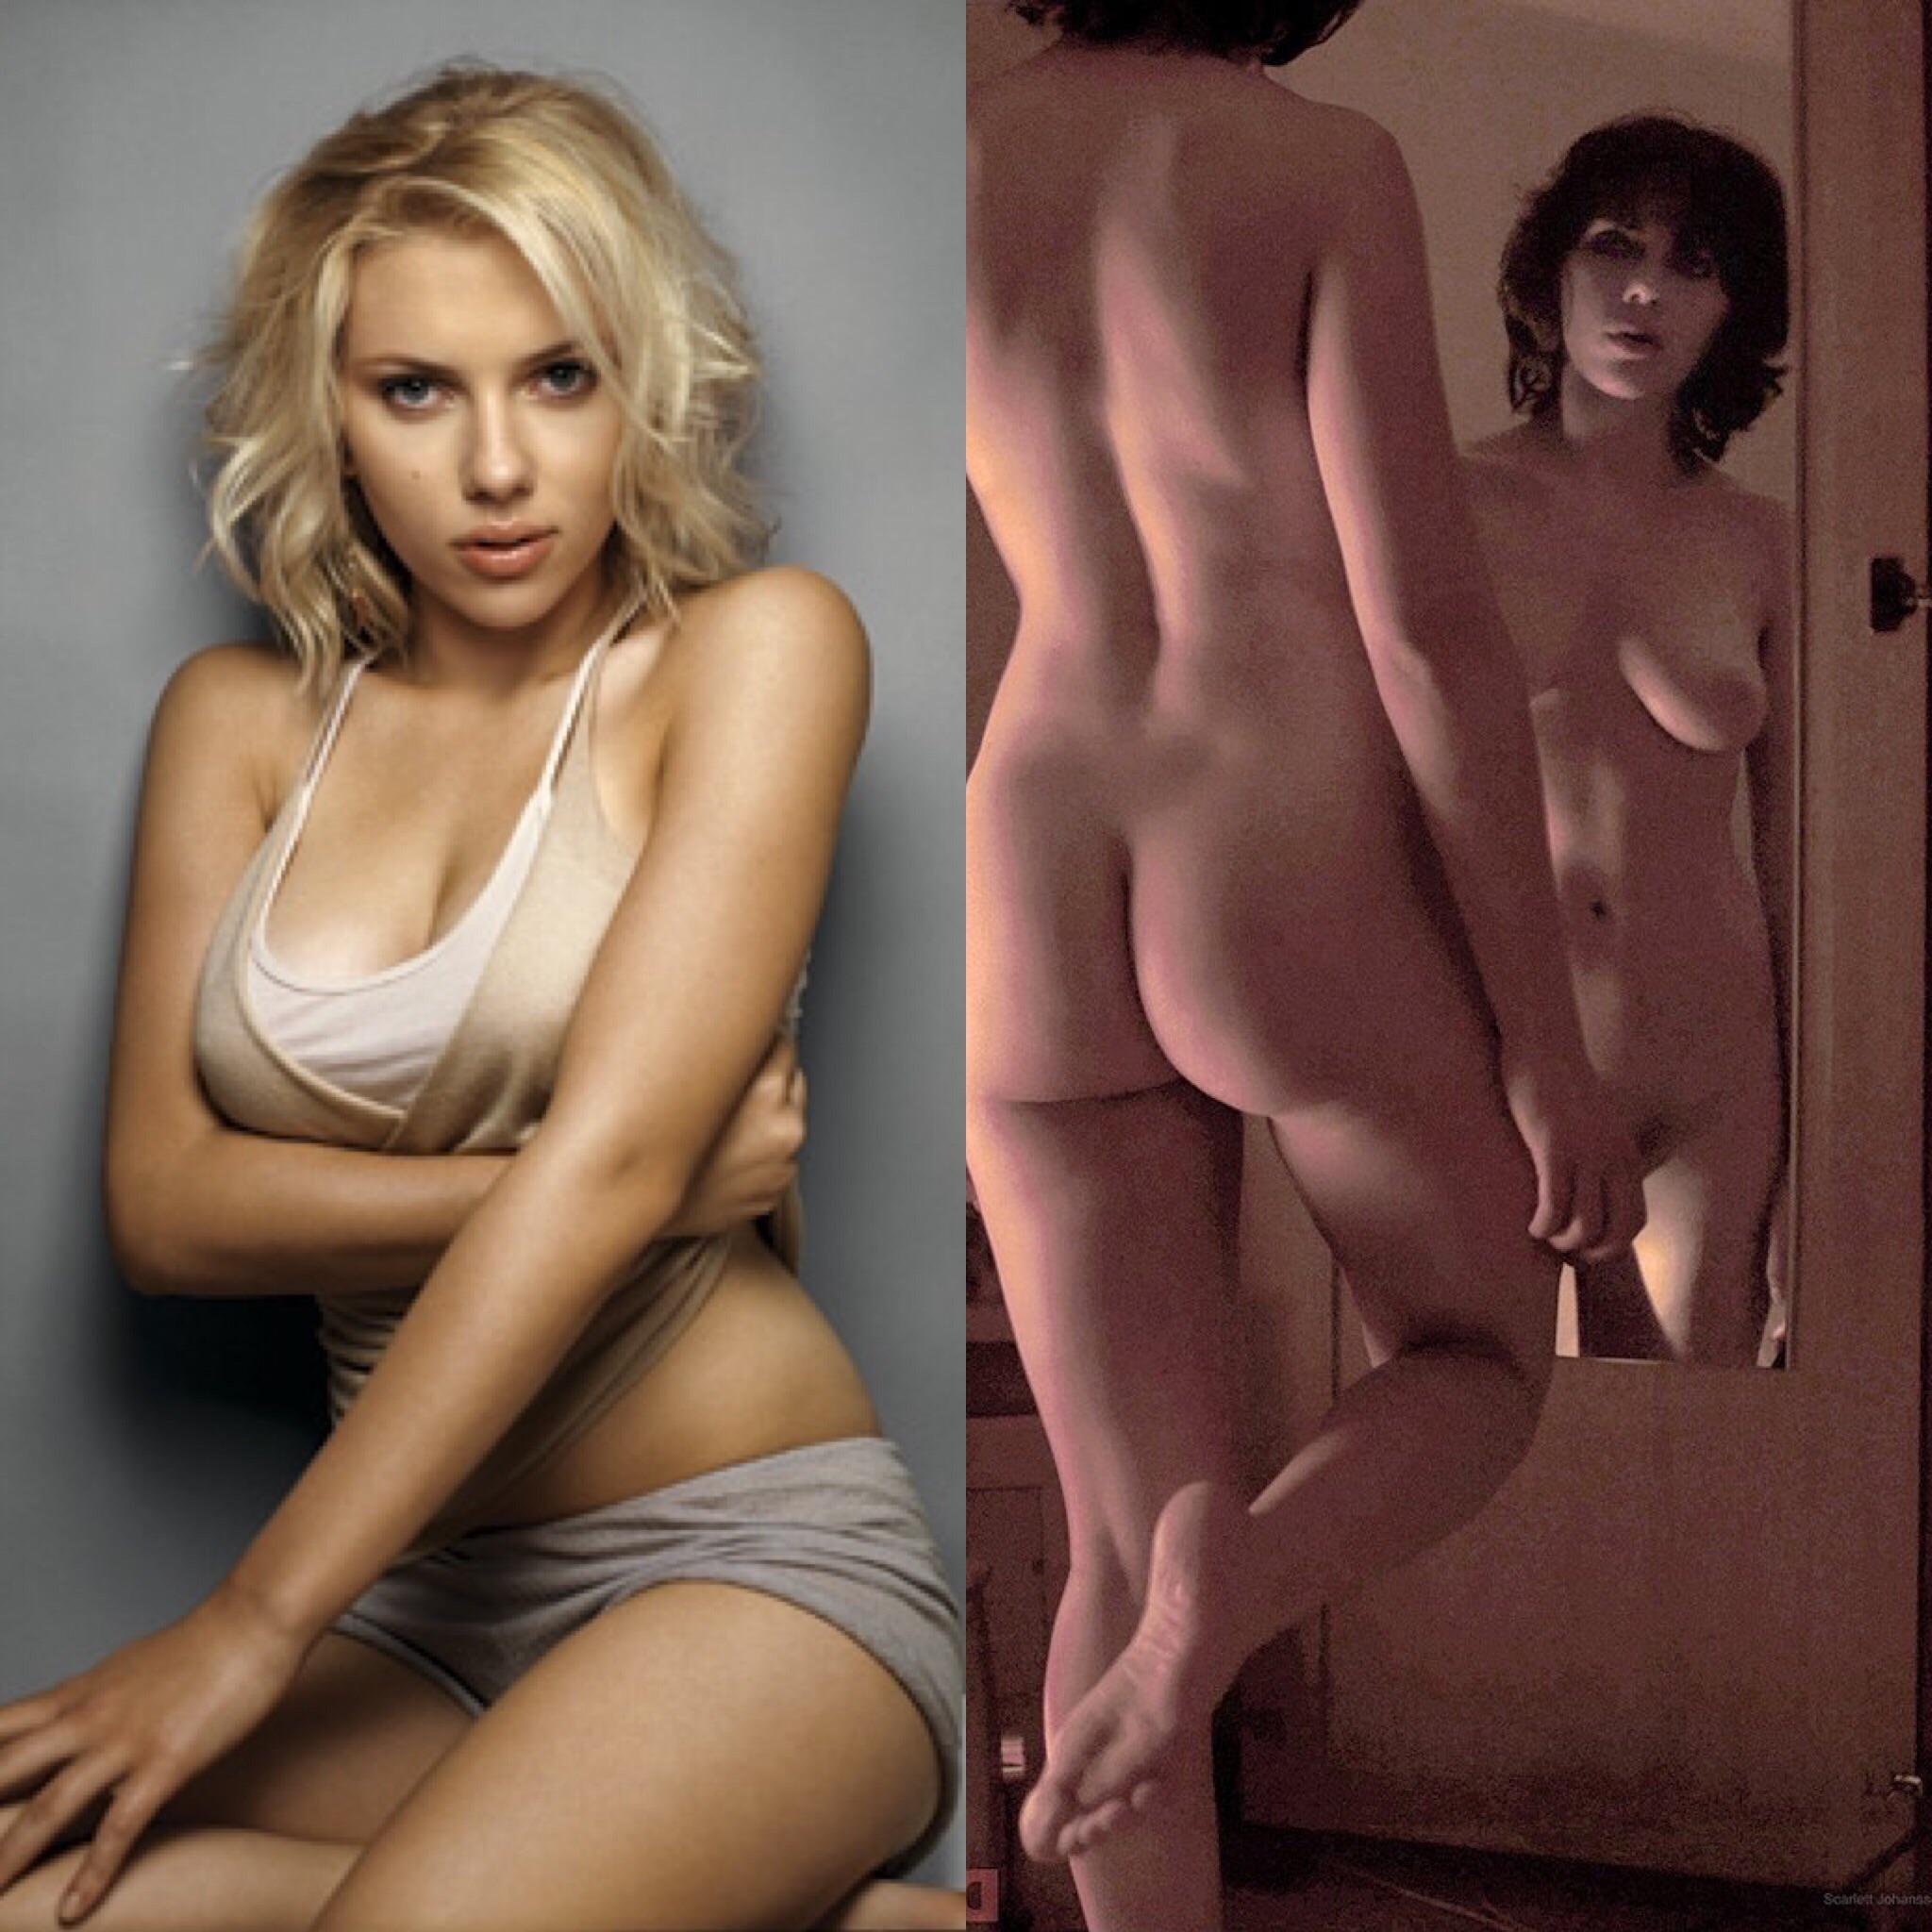 Scarlett johansson hot and nude